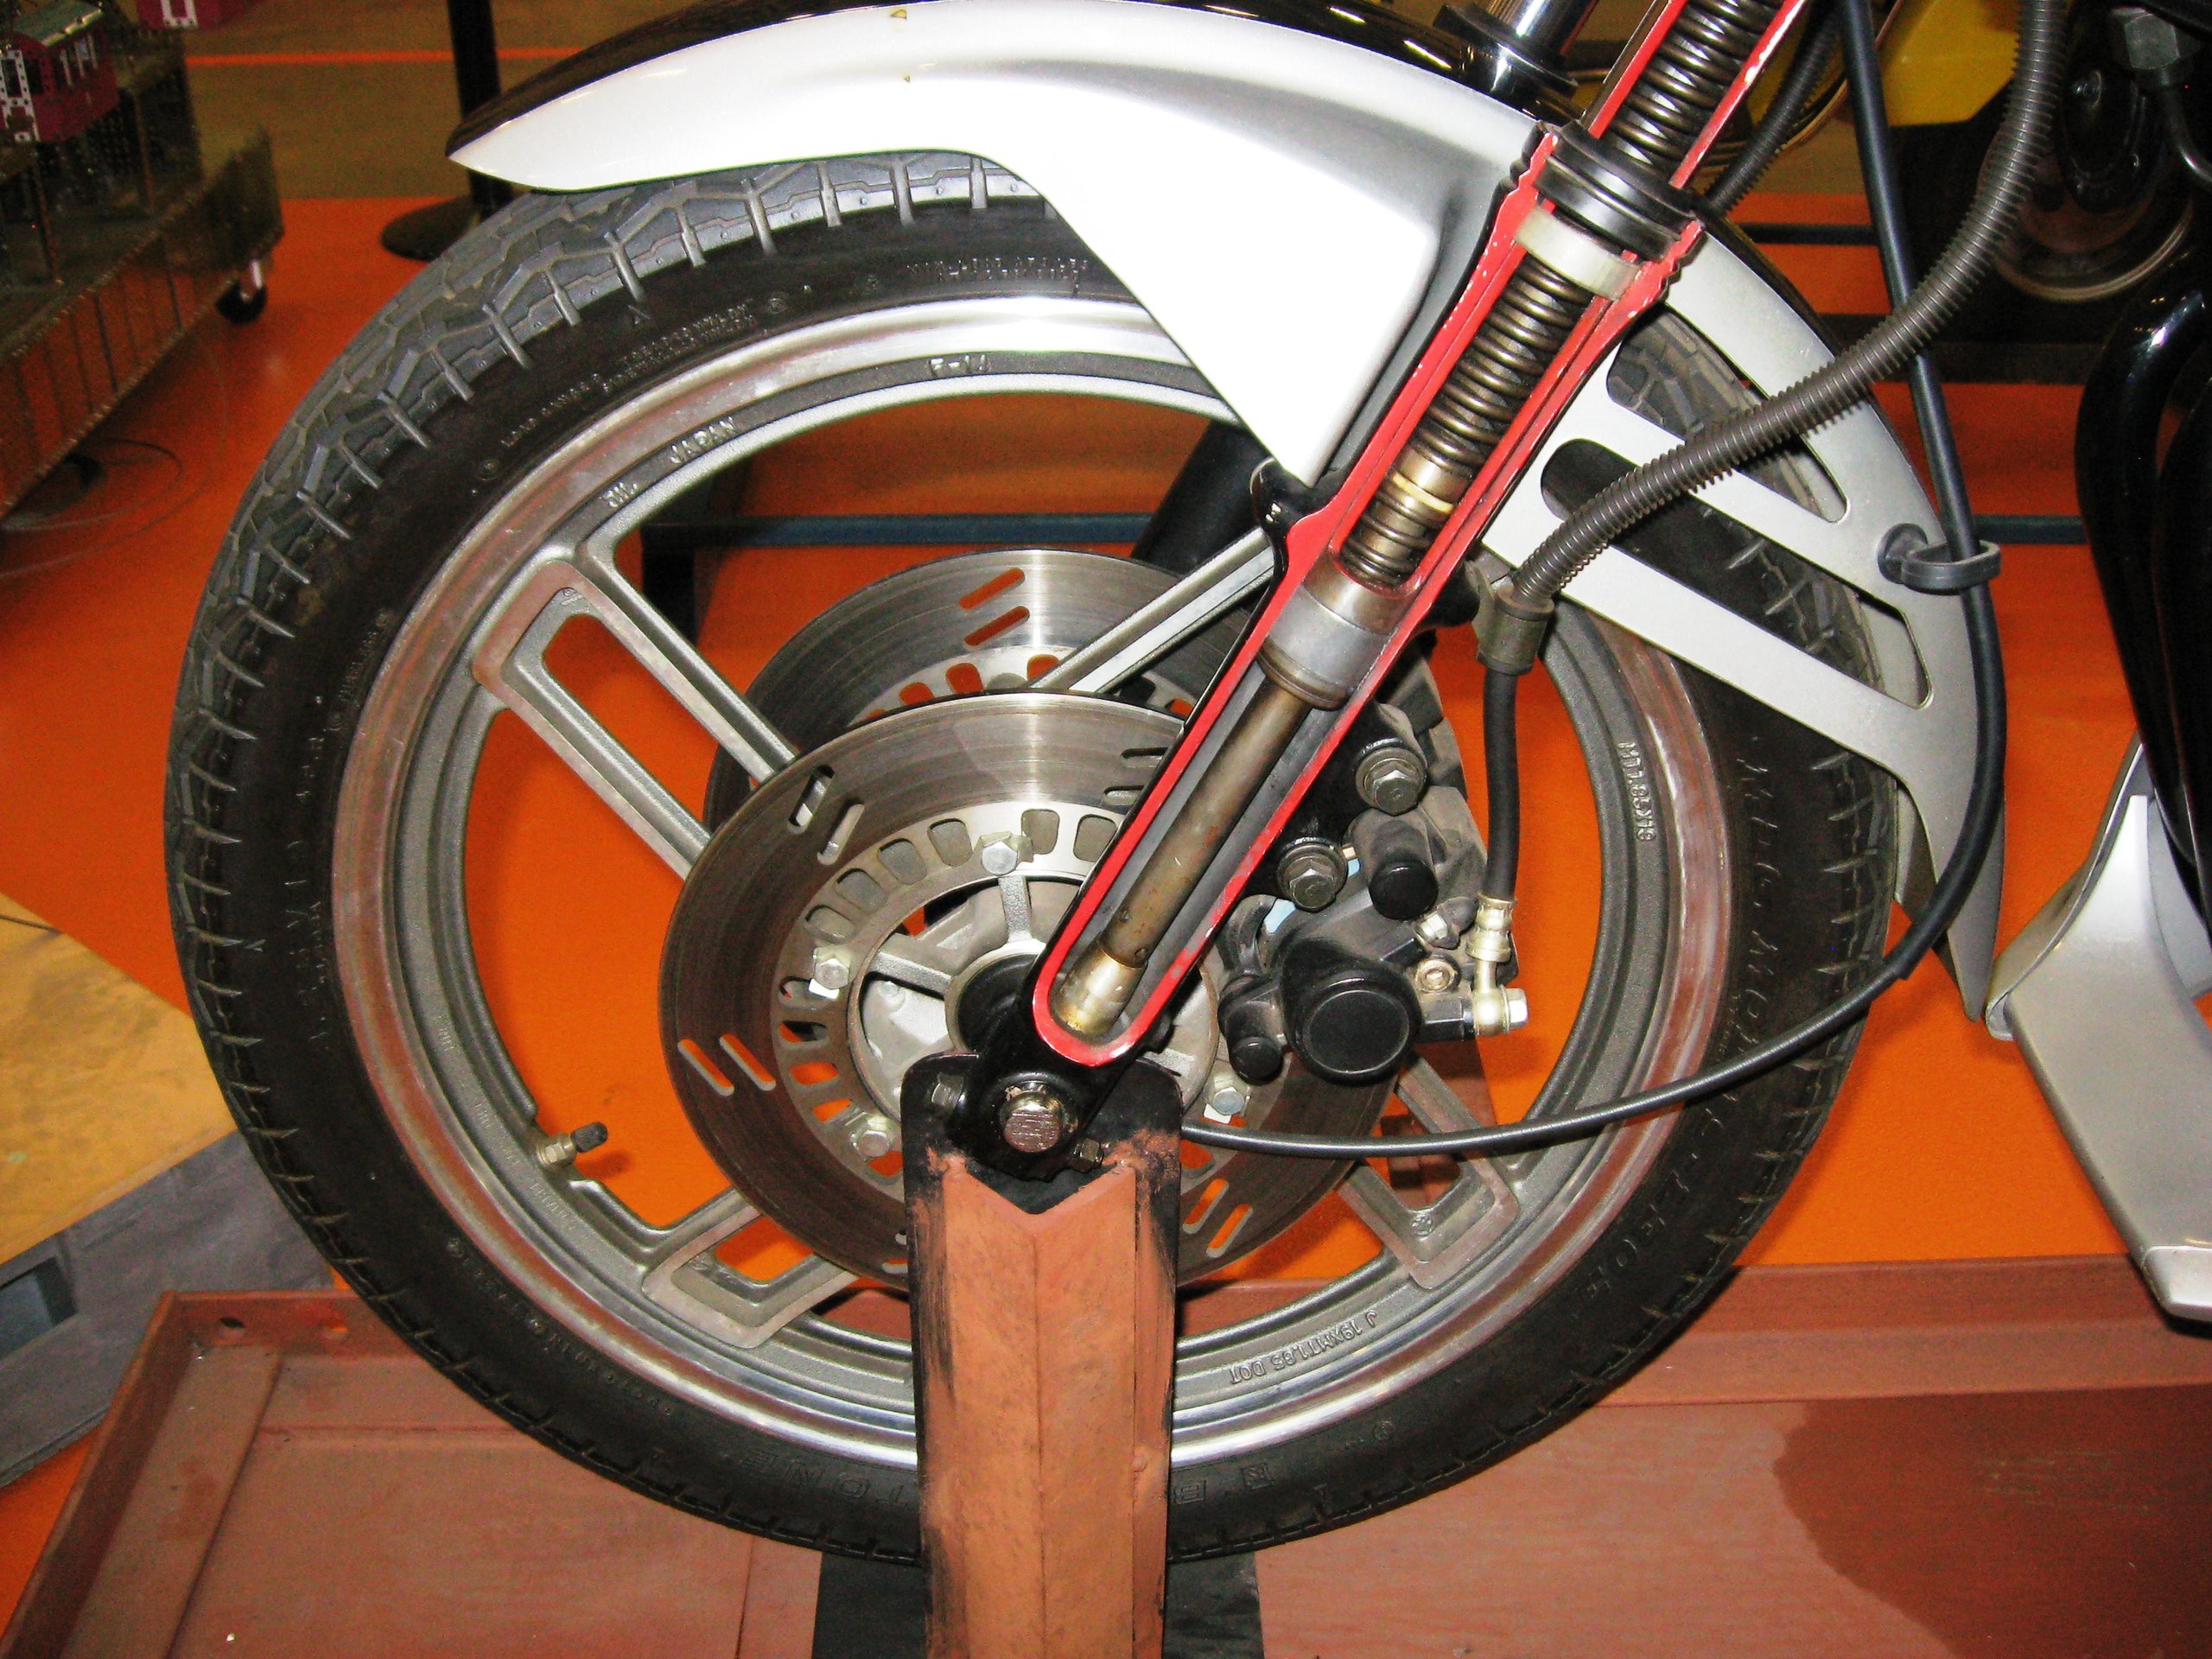 Sectioned Yamaha XJ650 Seca Turbo motorcycle